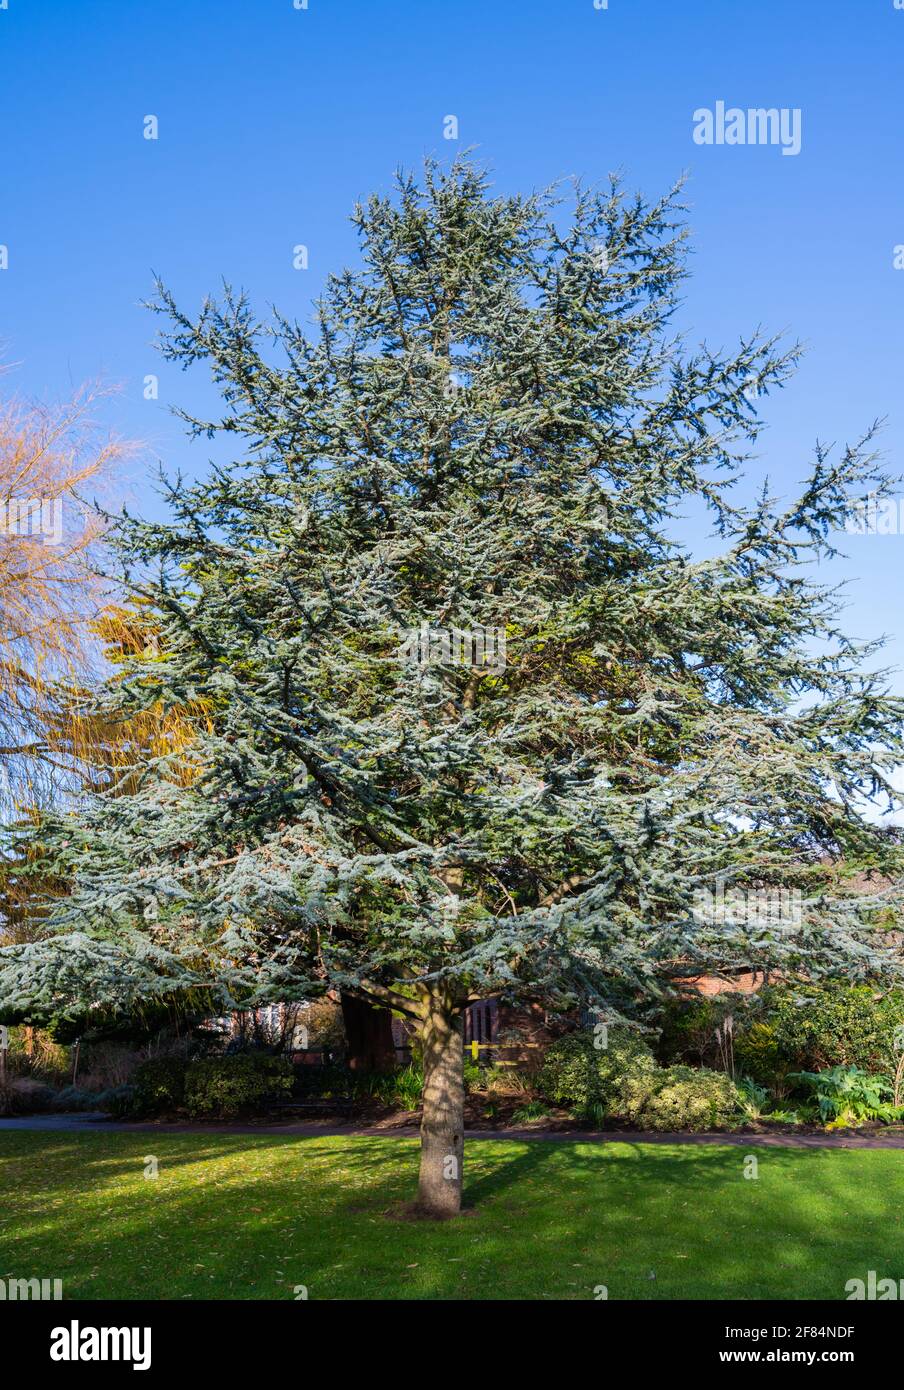 Cedar Tree, probabile Blue Atlas Cedar Tree (Cedrus atlantica glauca) in un parco in inverno a Marina Gardens, Littlehampton West Sussex, Inghilterra, Regno Unito. Foto Stock